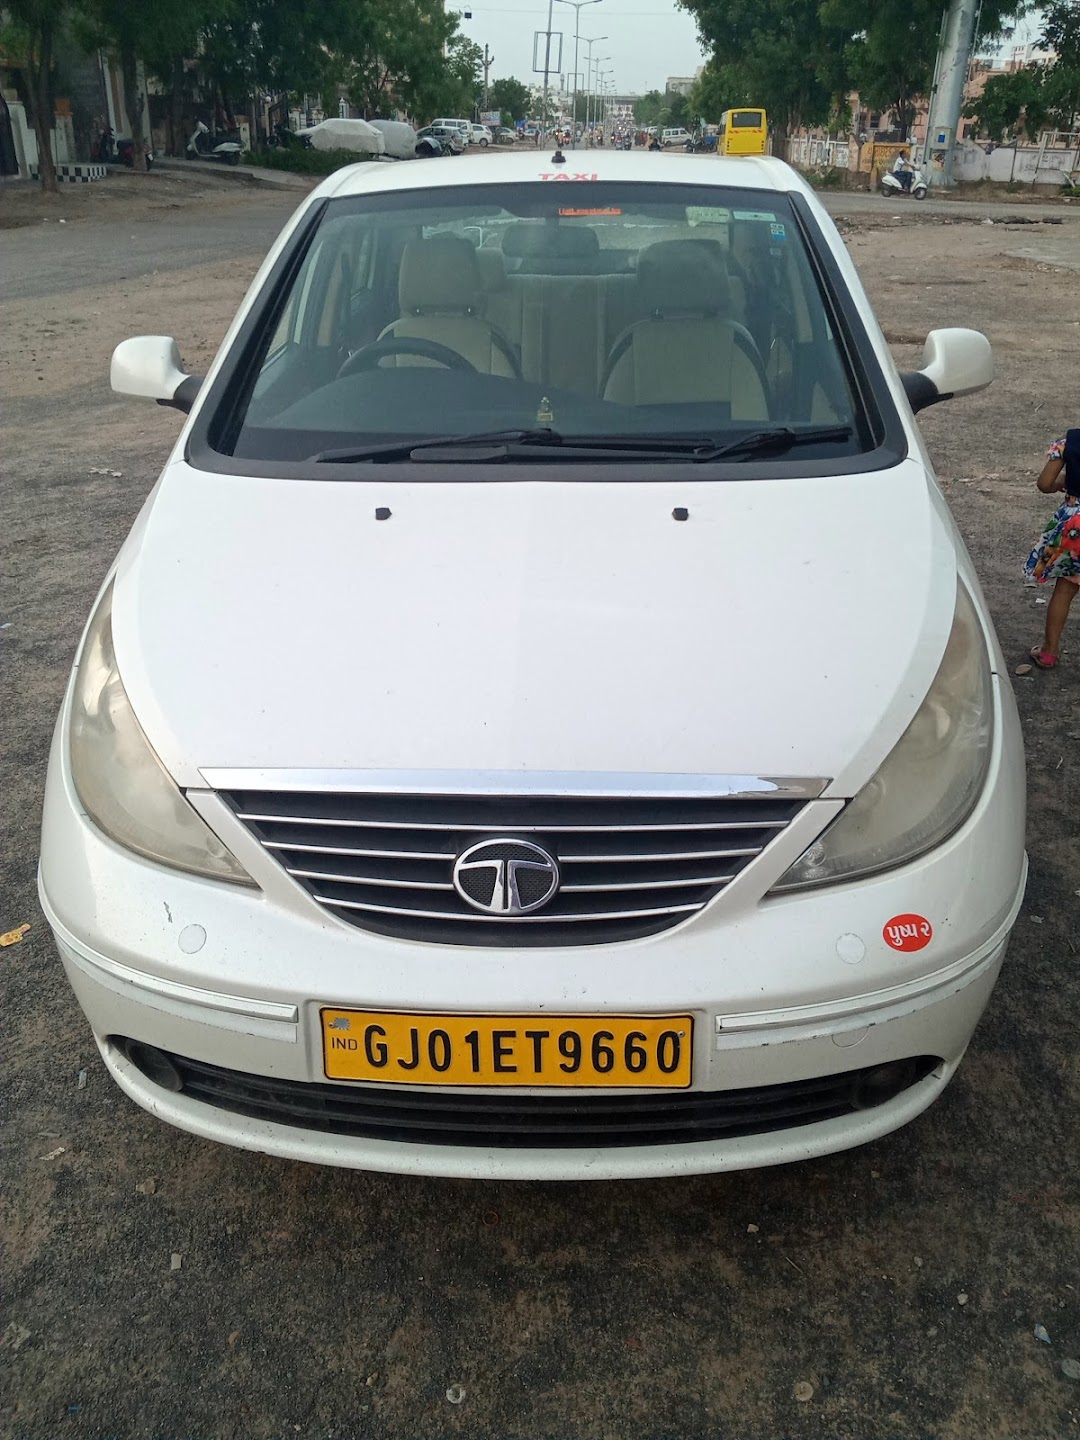 Zoomcar Self drive car rental- PWD Gulab Bagh Parking Lot